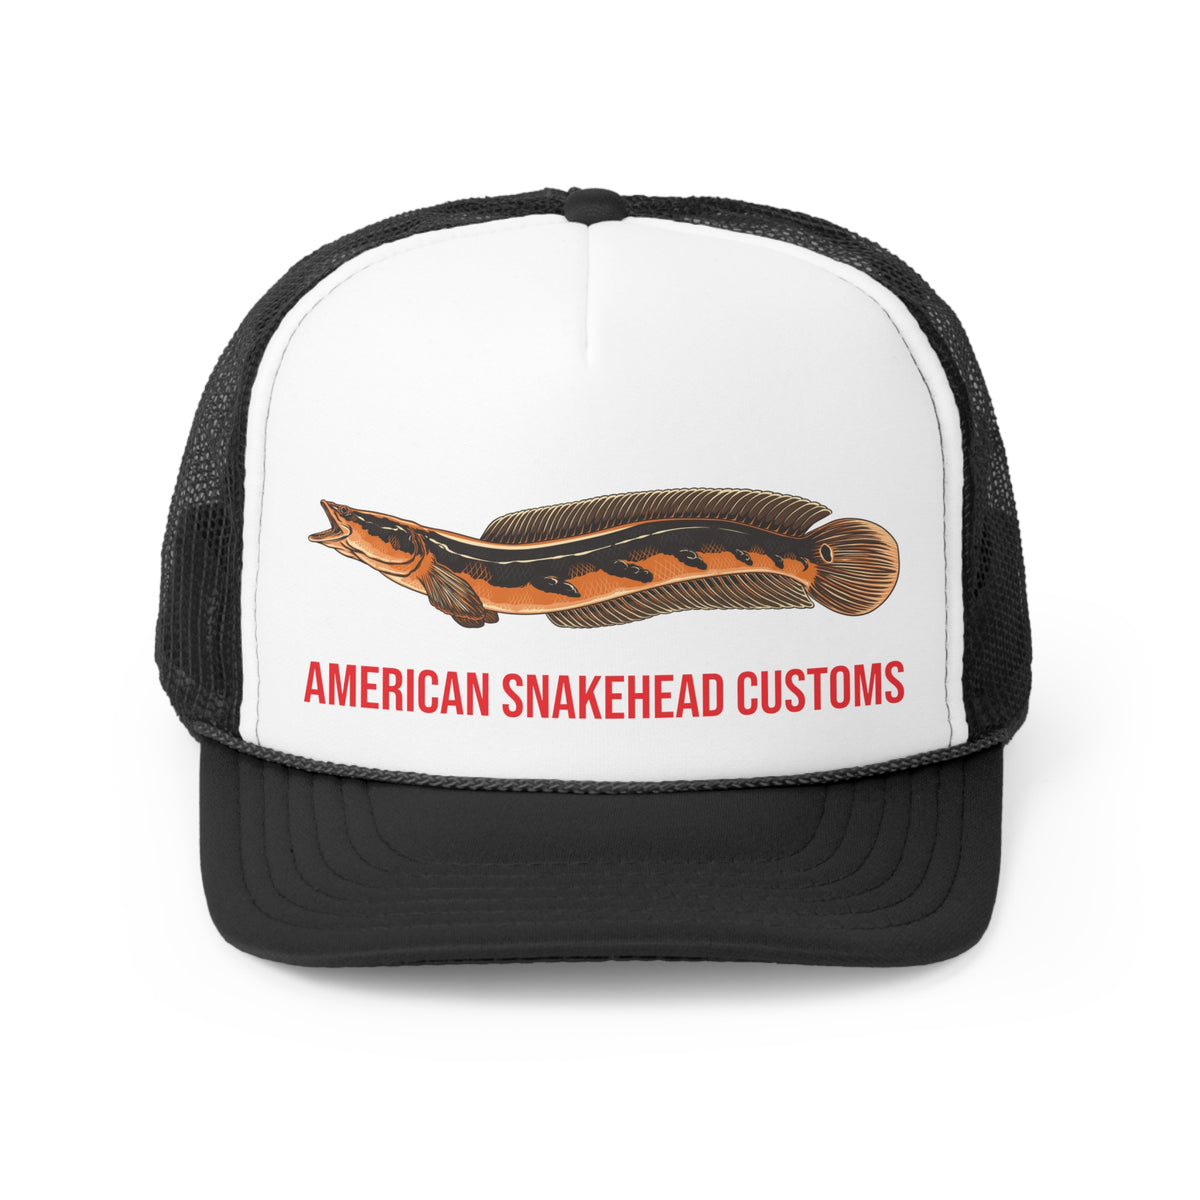 American Snakehead Customs